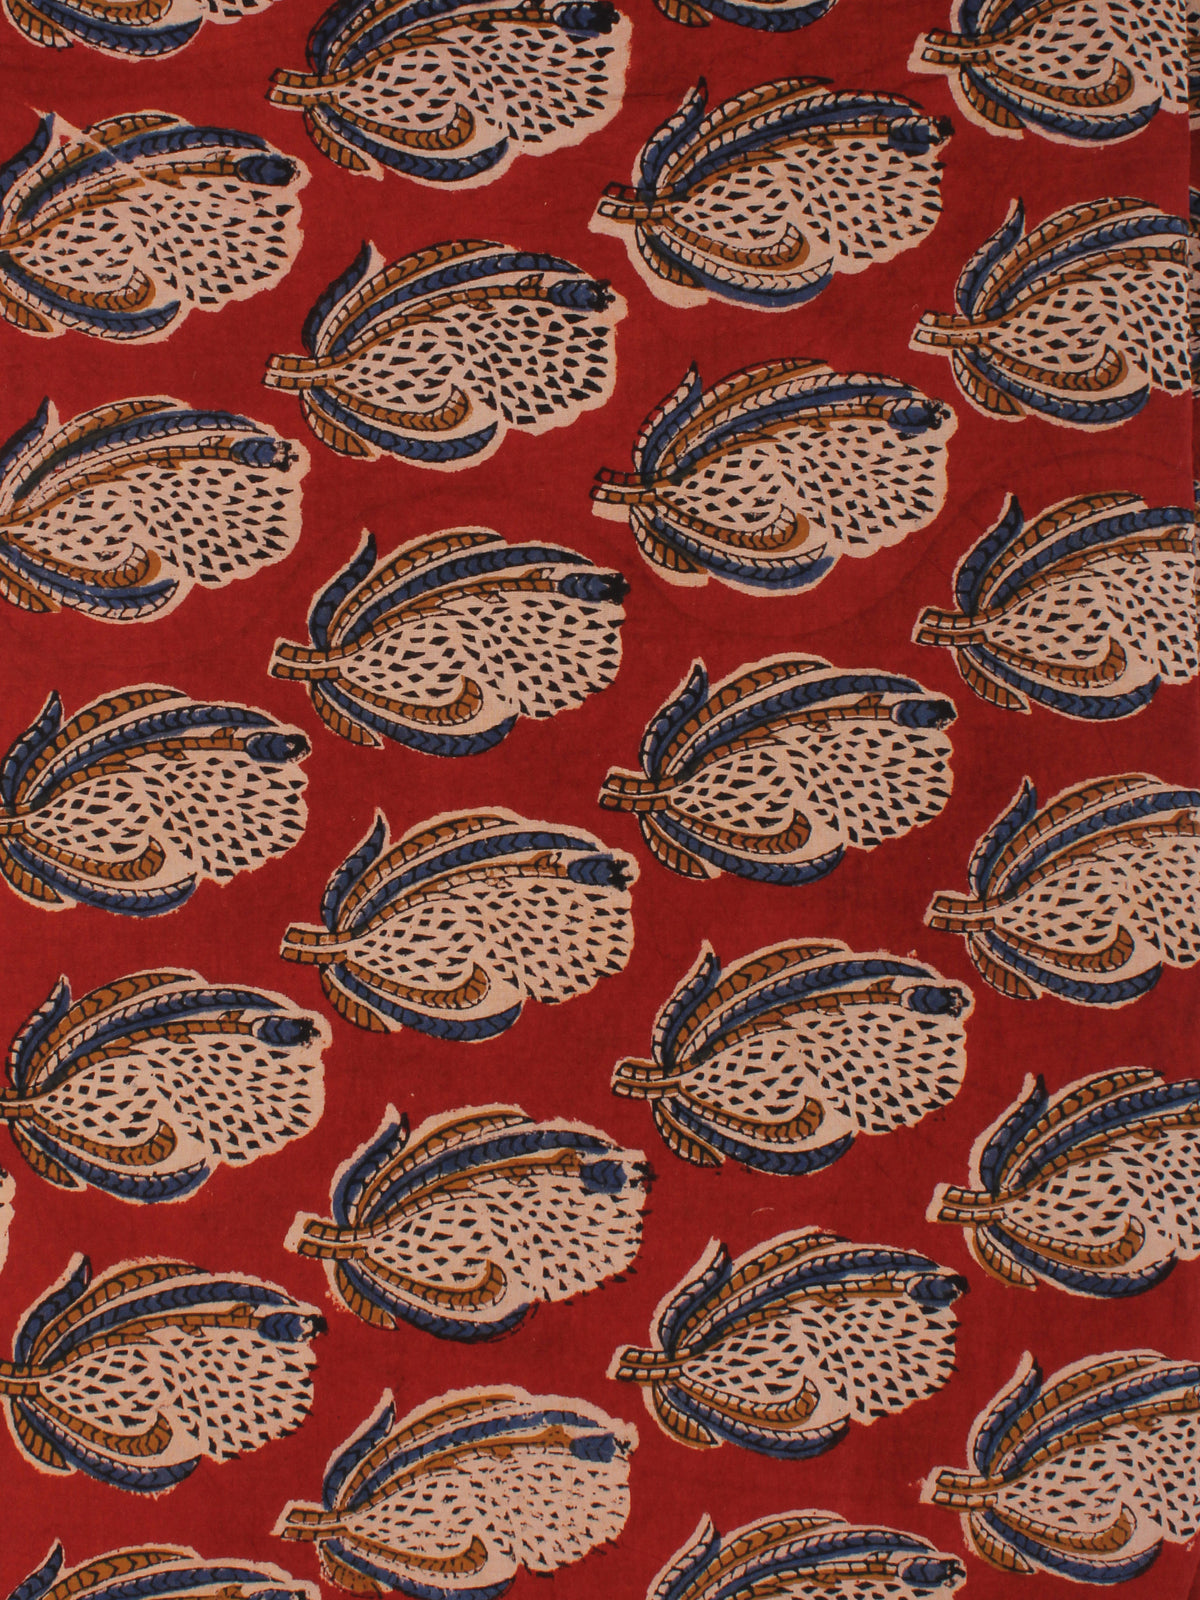 Red Indigo Ivory Hand Block Printed Cotton Fabric Per Meter - F001F2152